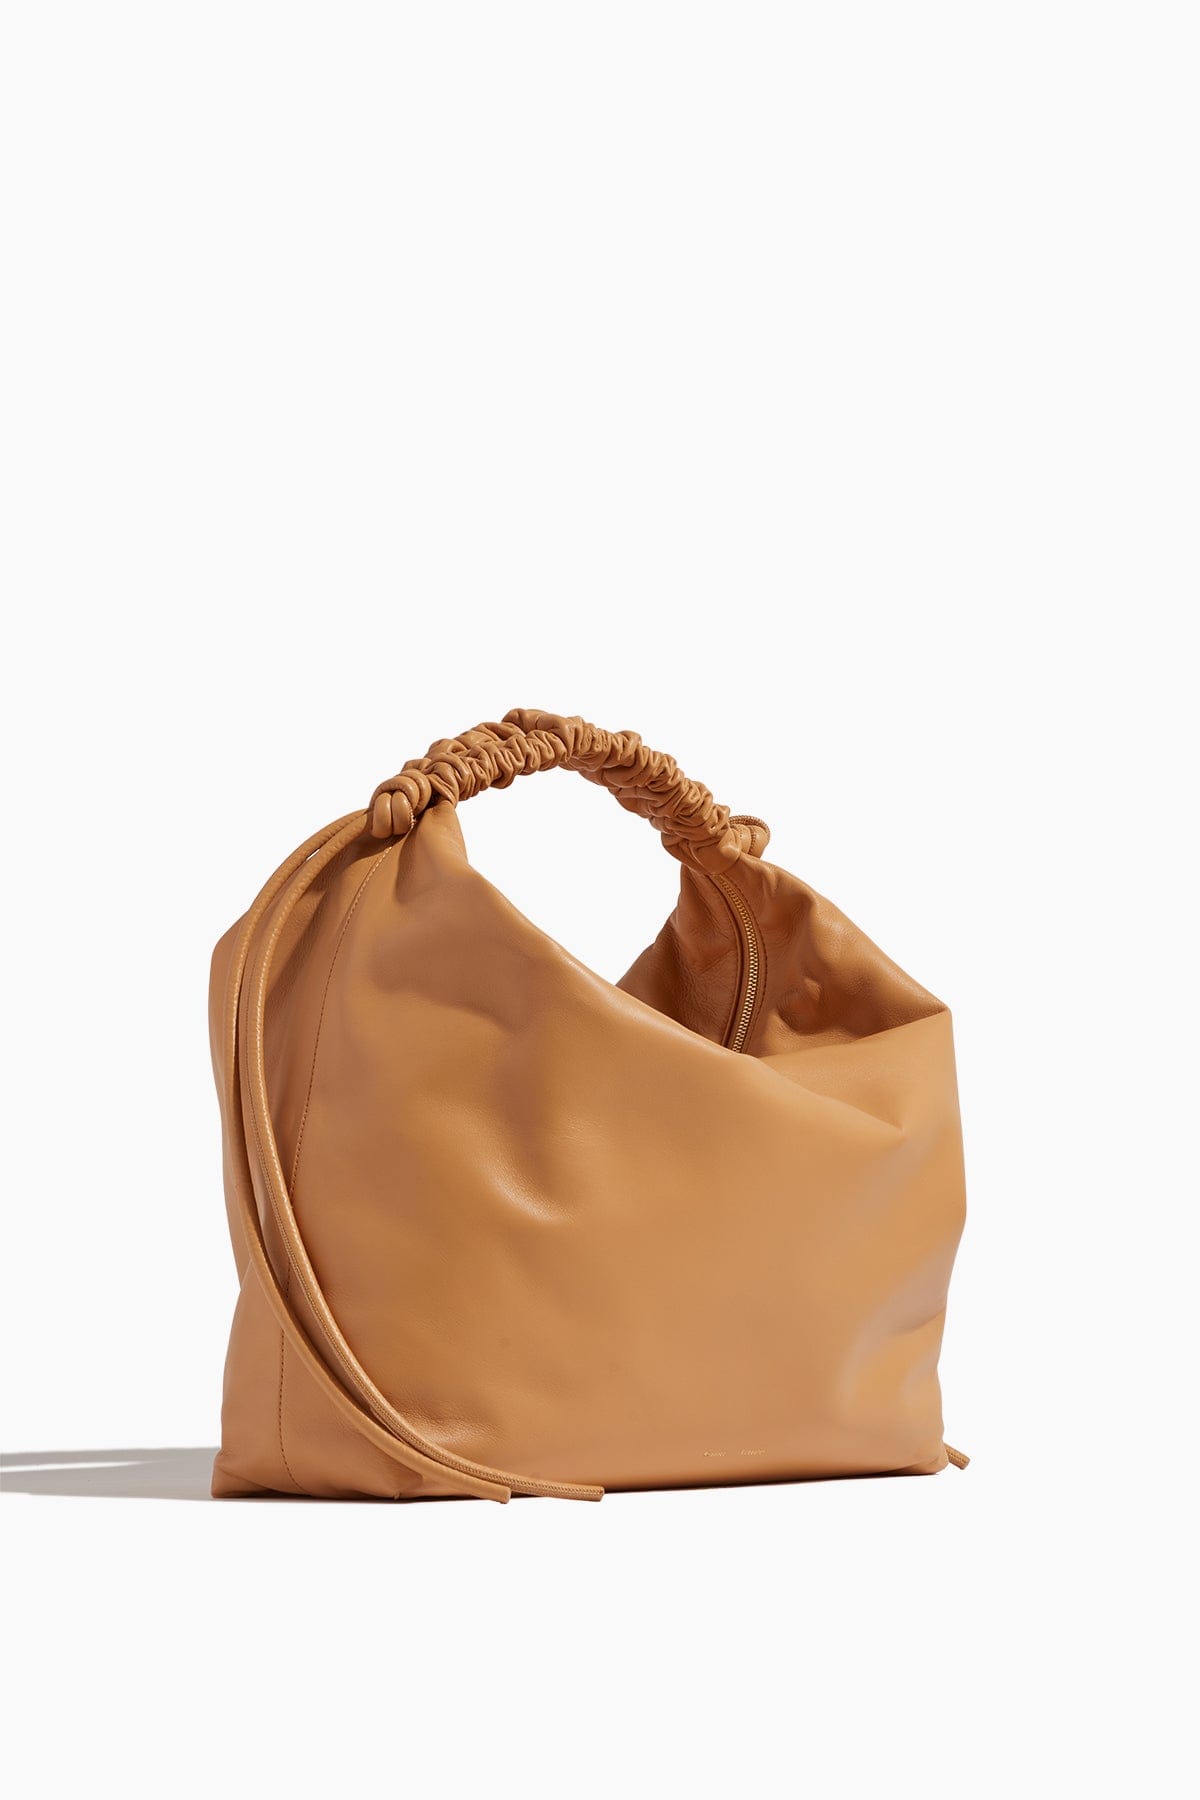 Proenza Schouler Shoulder Bags Large Drawstring Shoulder Bag in Sand Proenza Schouler Large Drawstring Shoulder Bag in Sand